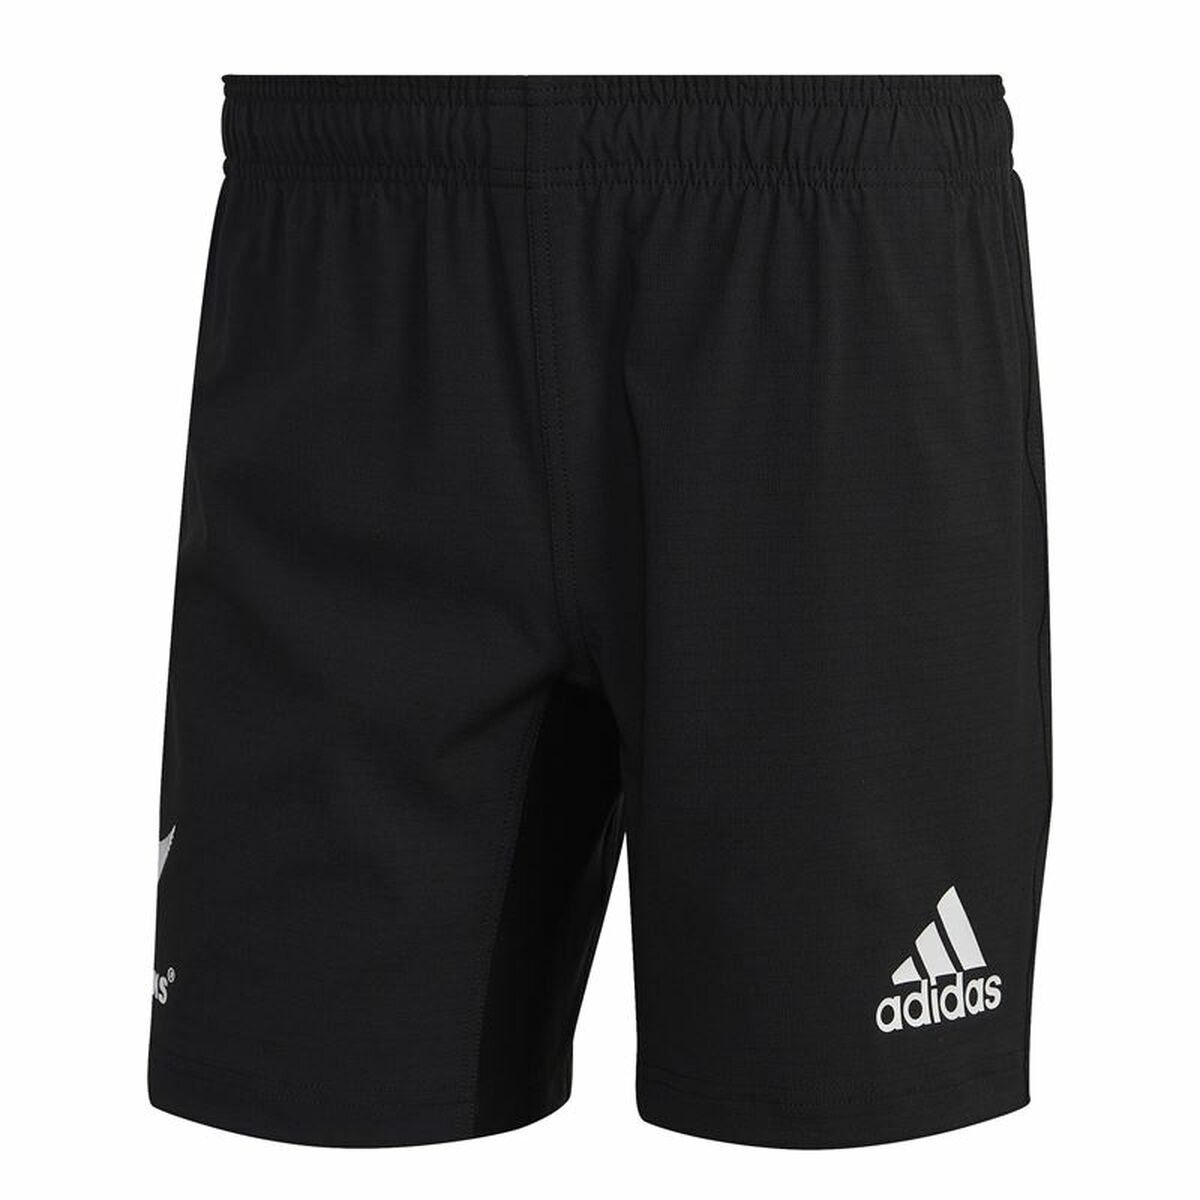 Short de Sport pour Homme Adidas First Equipment Noir